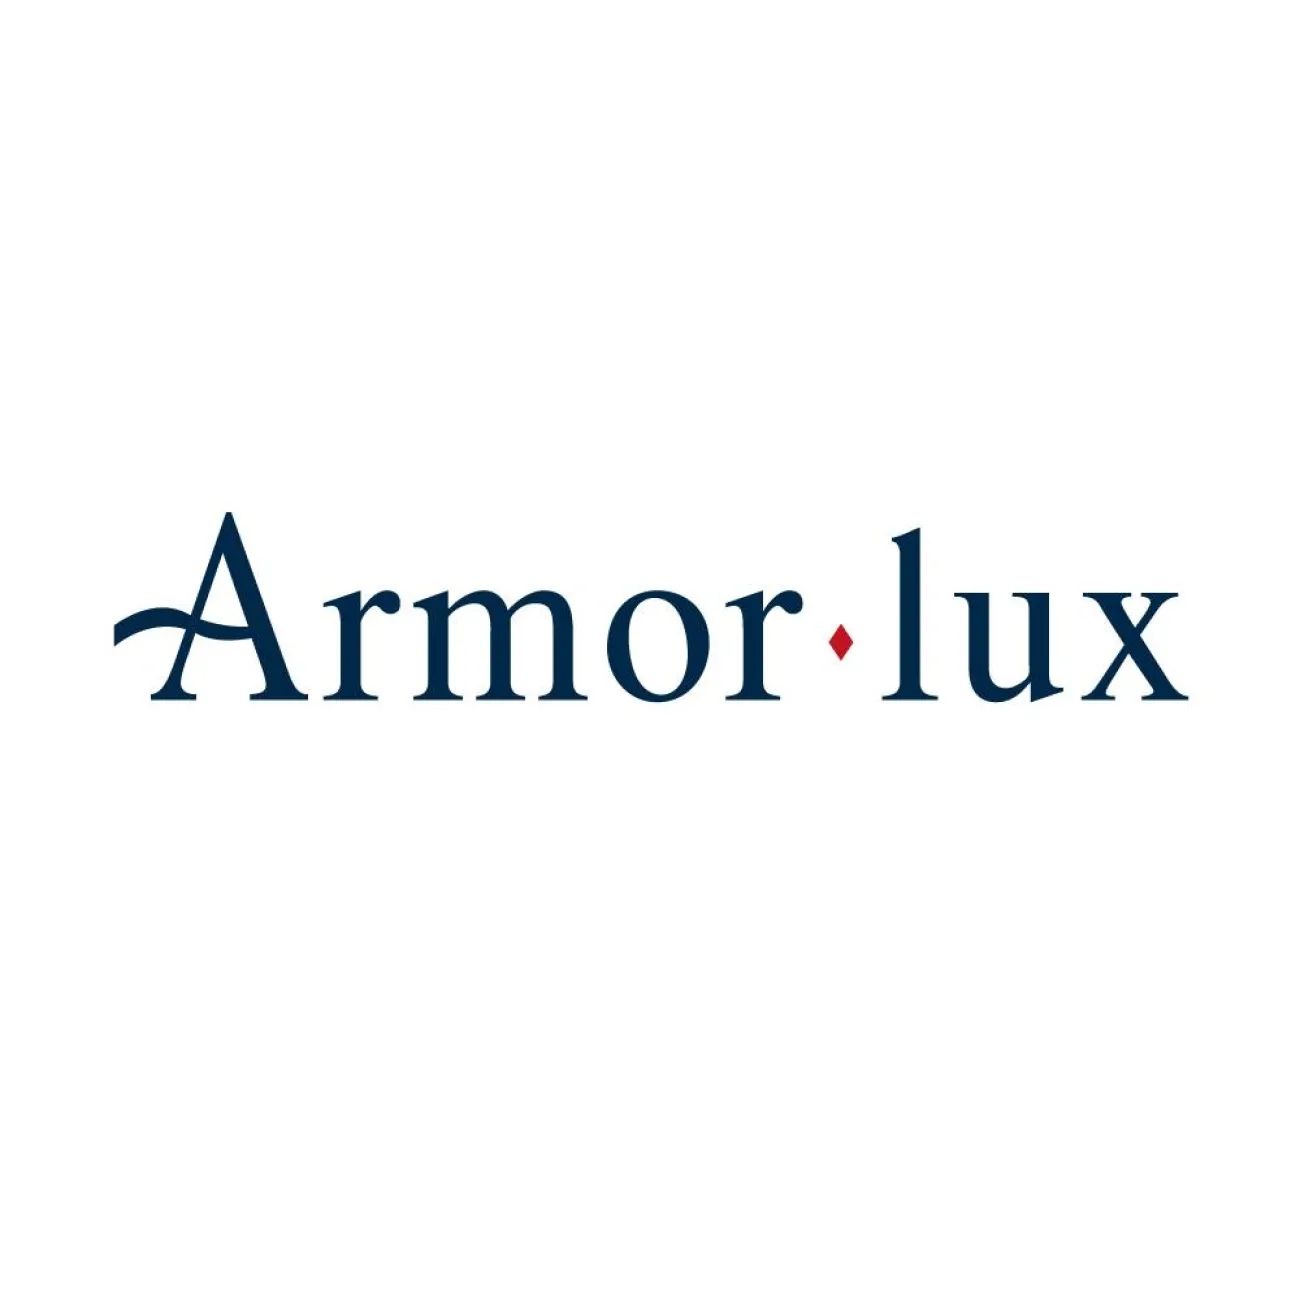 armor lux 2